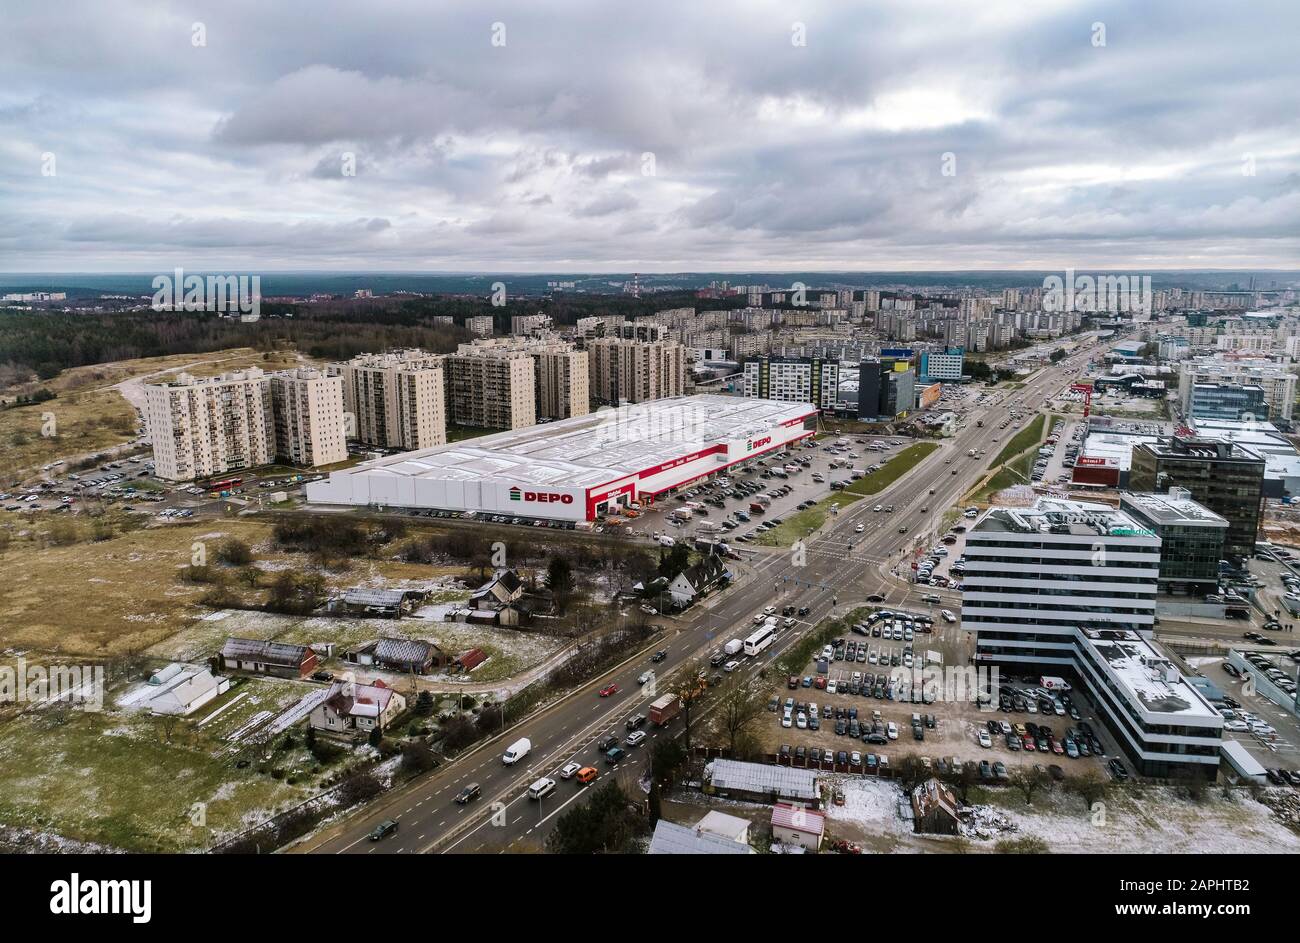 Vilnius Fabijoniskes district view from drone perspective Stock Photo